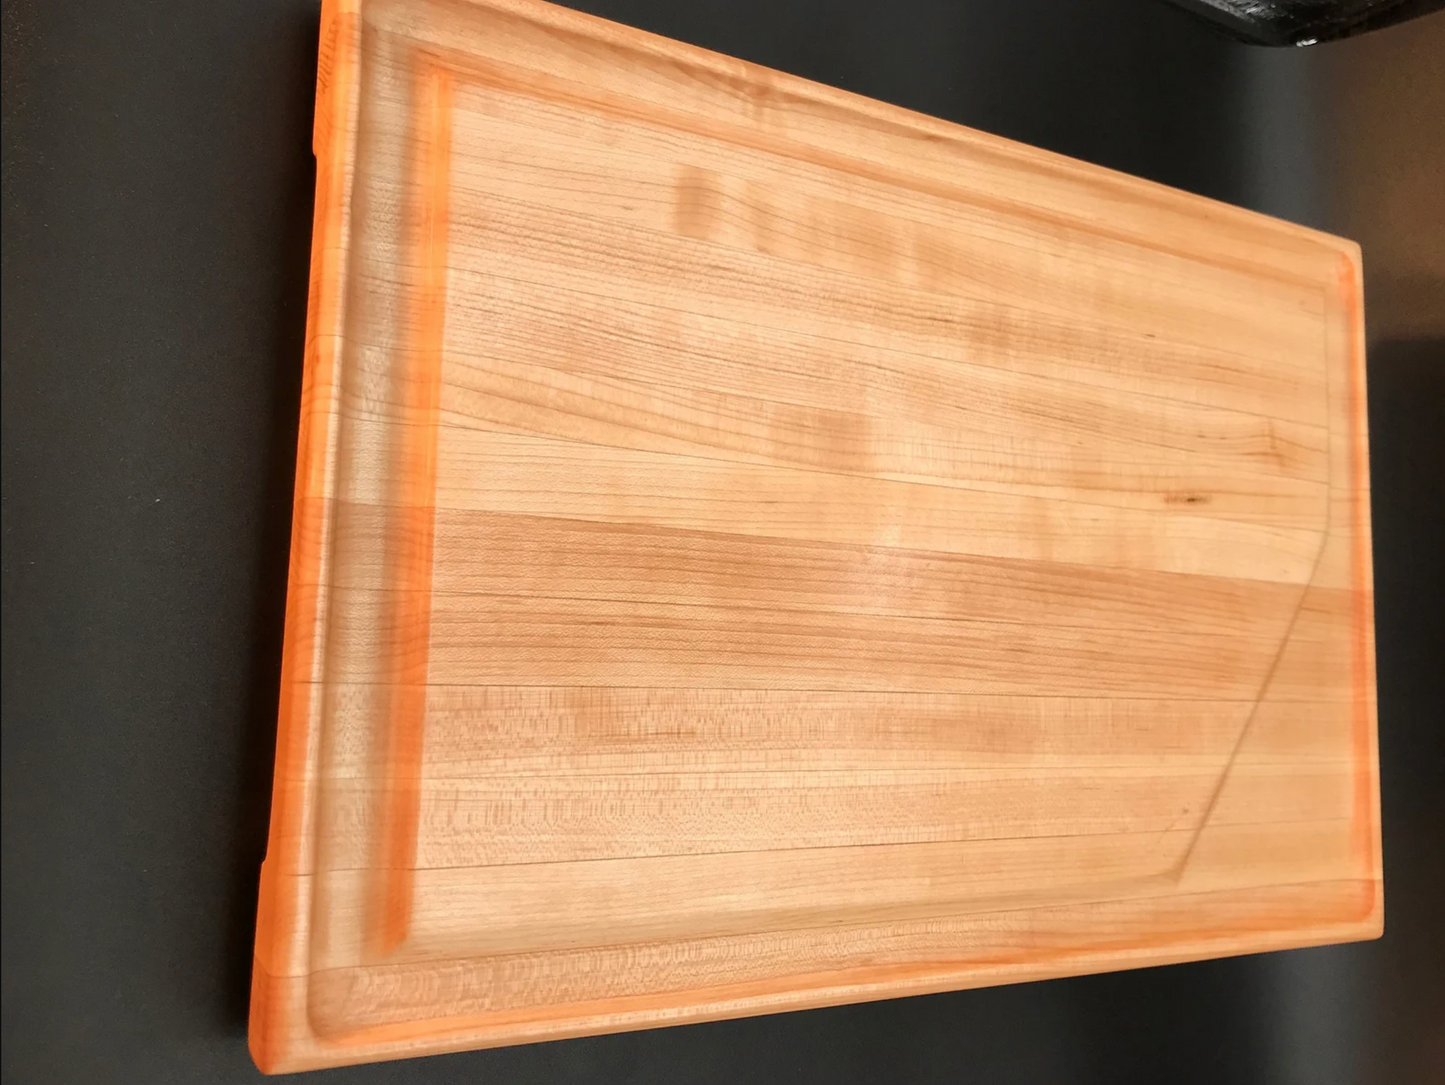 Maple Edge Grain Cutting Board with Juice Well